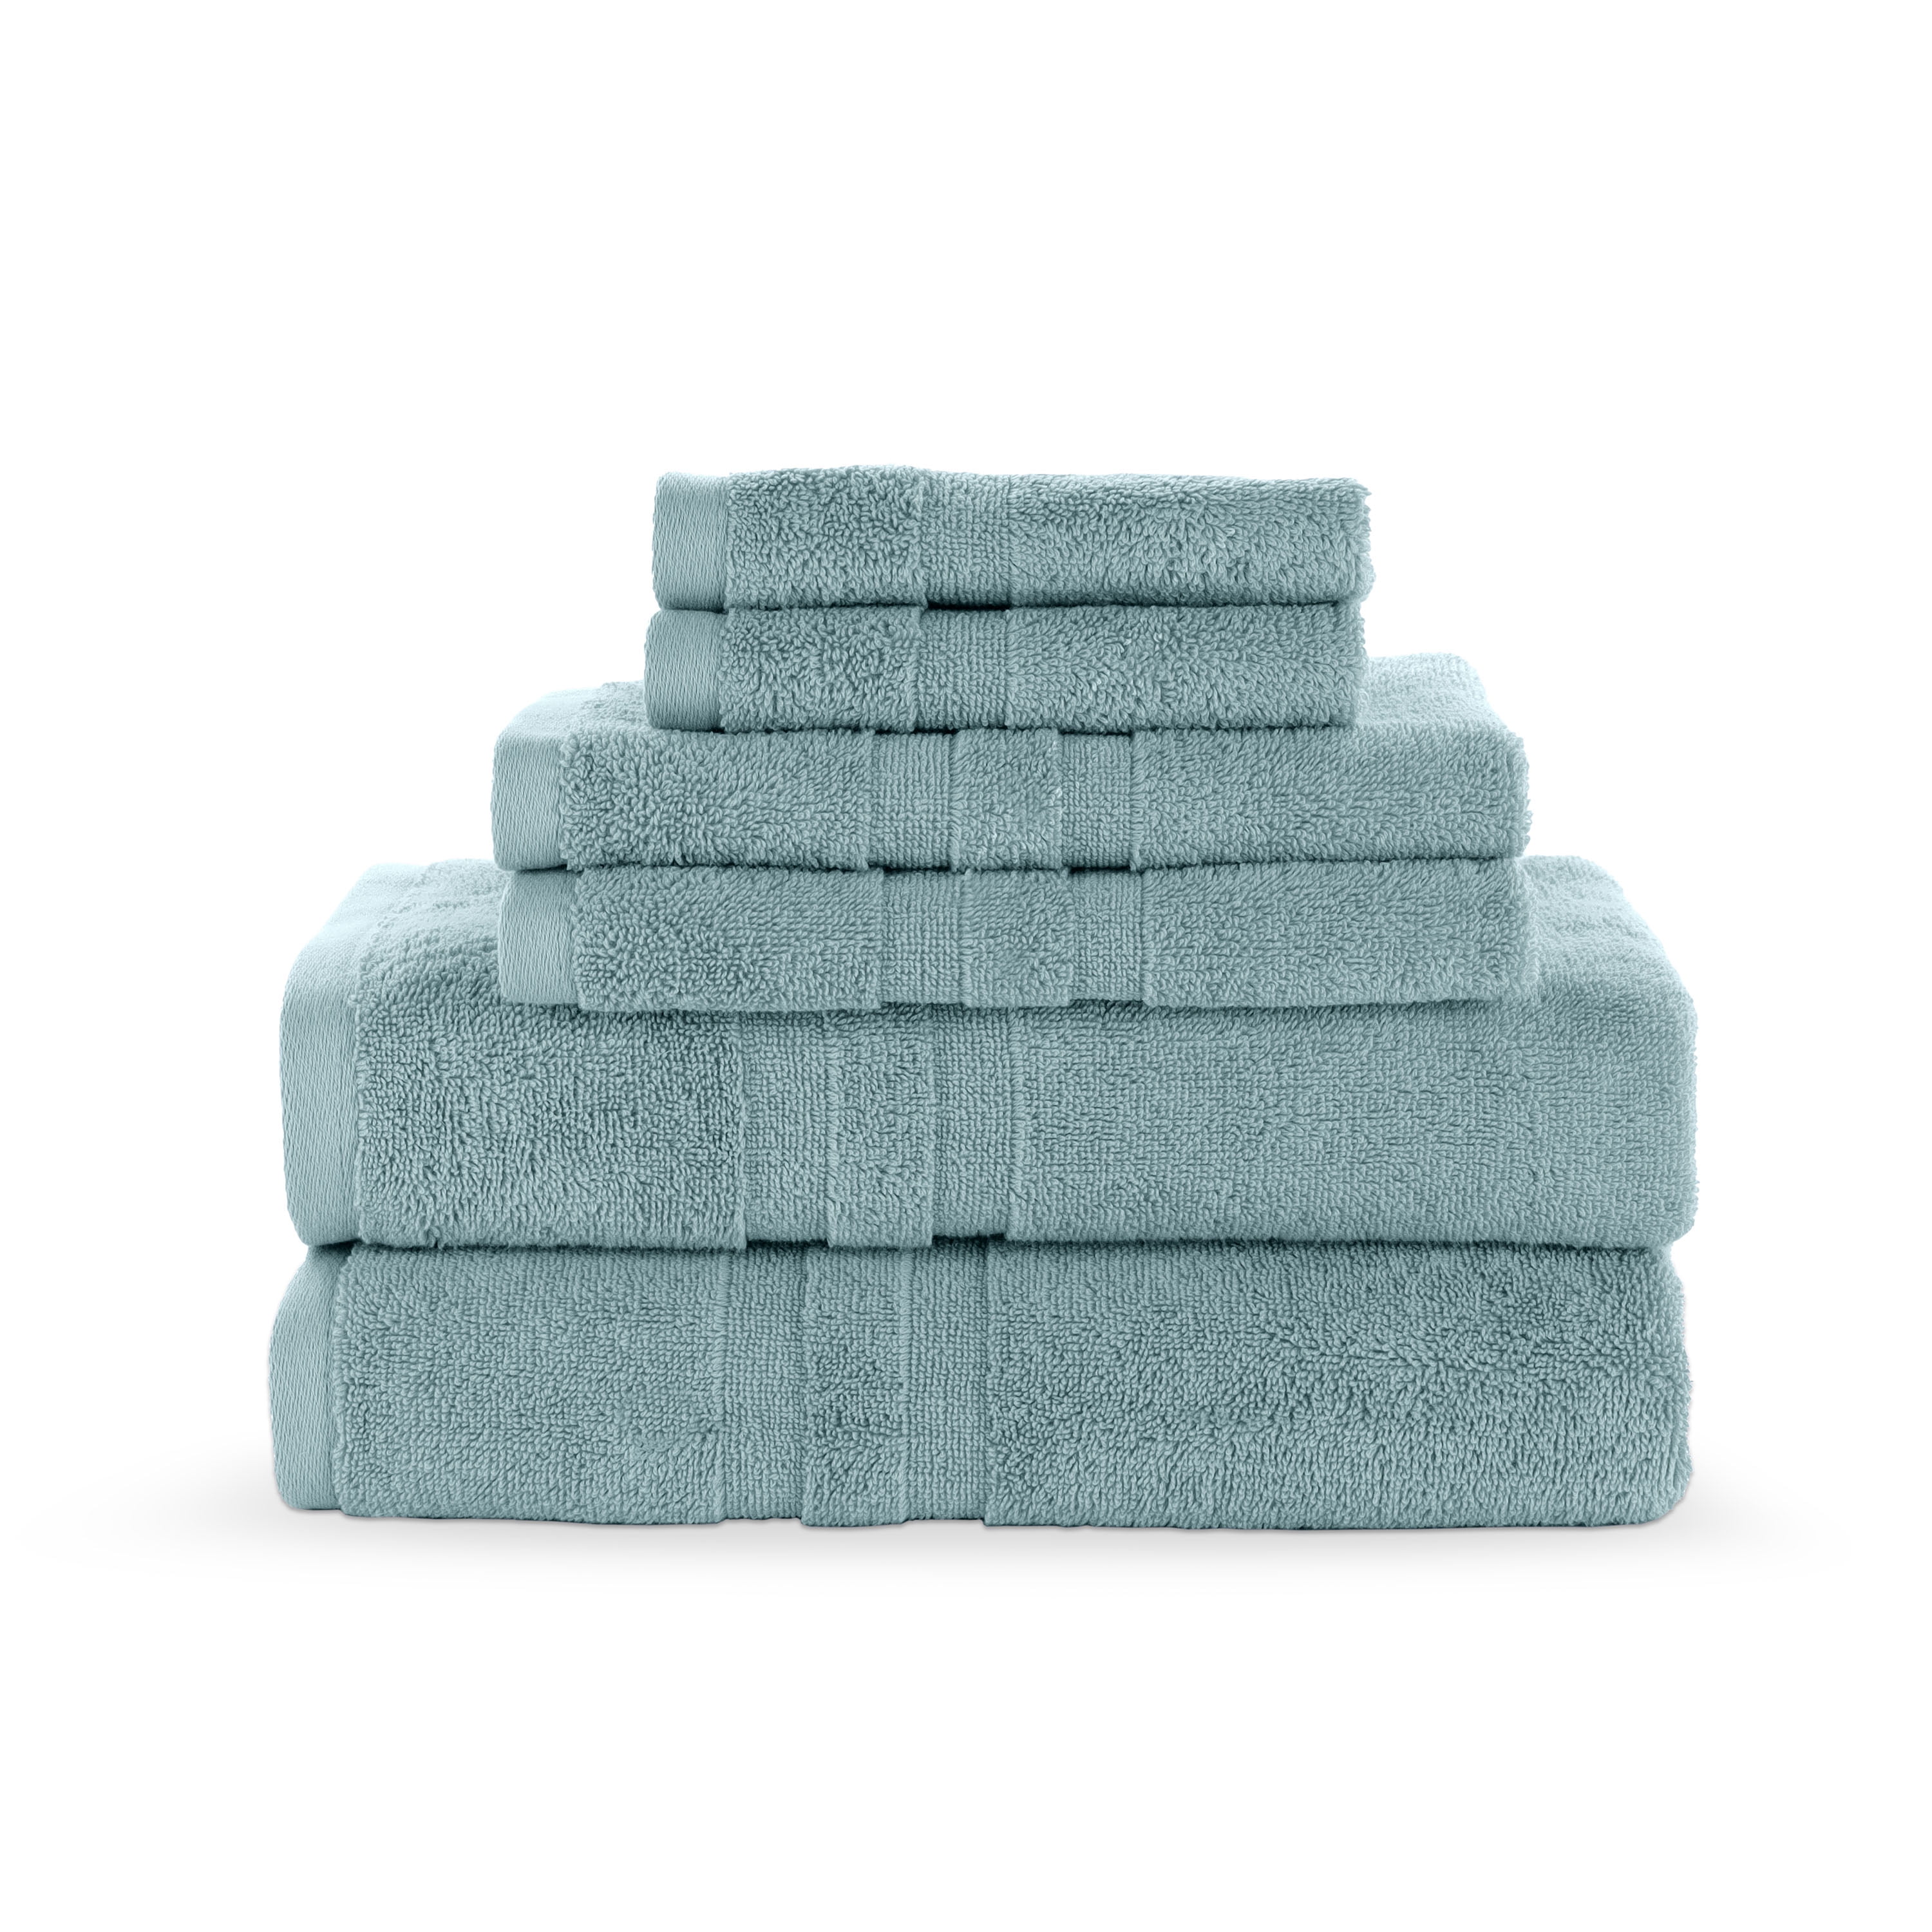 Martex Mineral 6 Piece Purity Towel Set